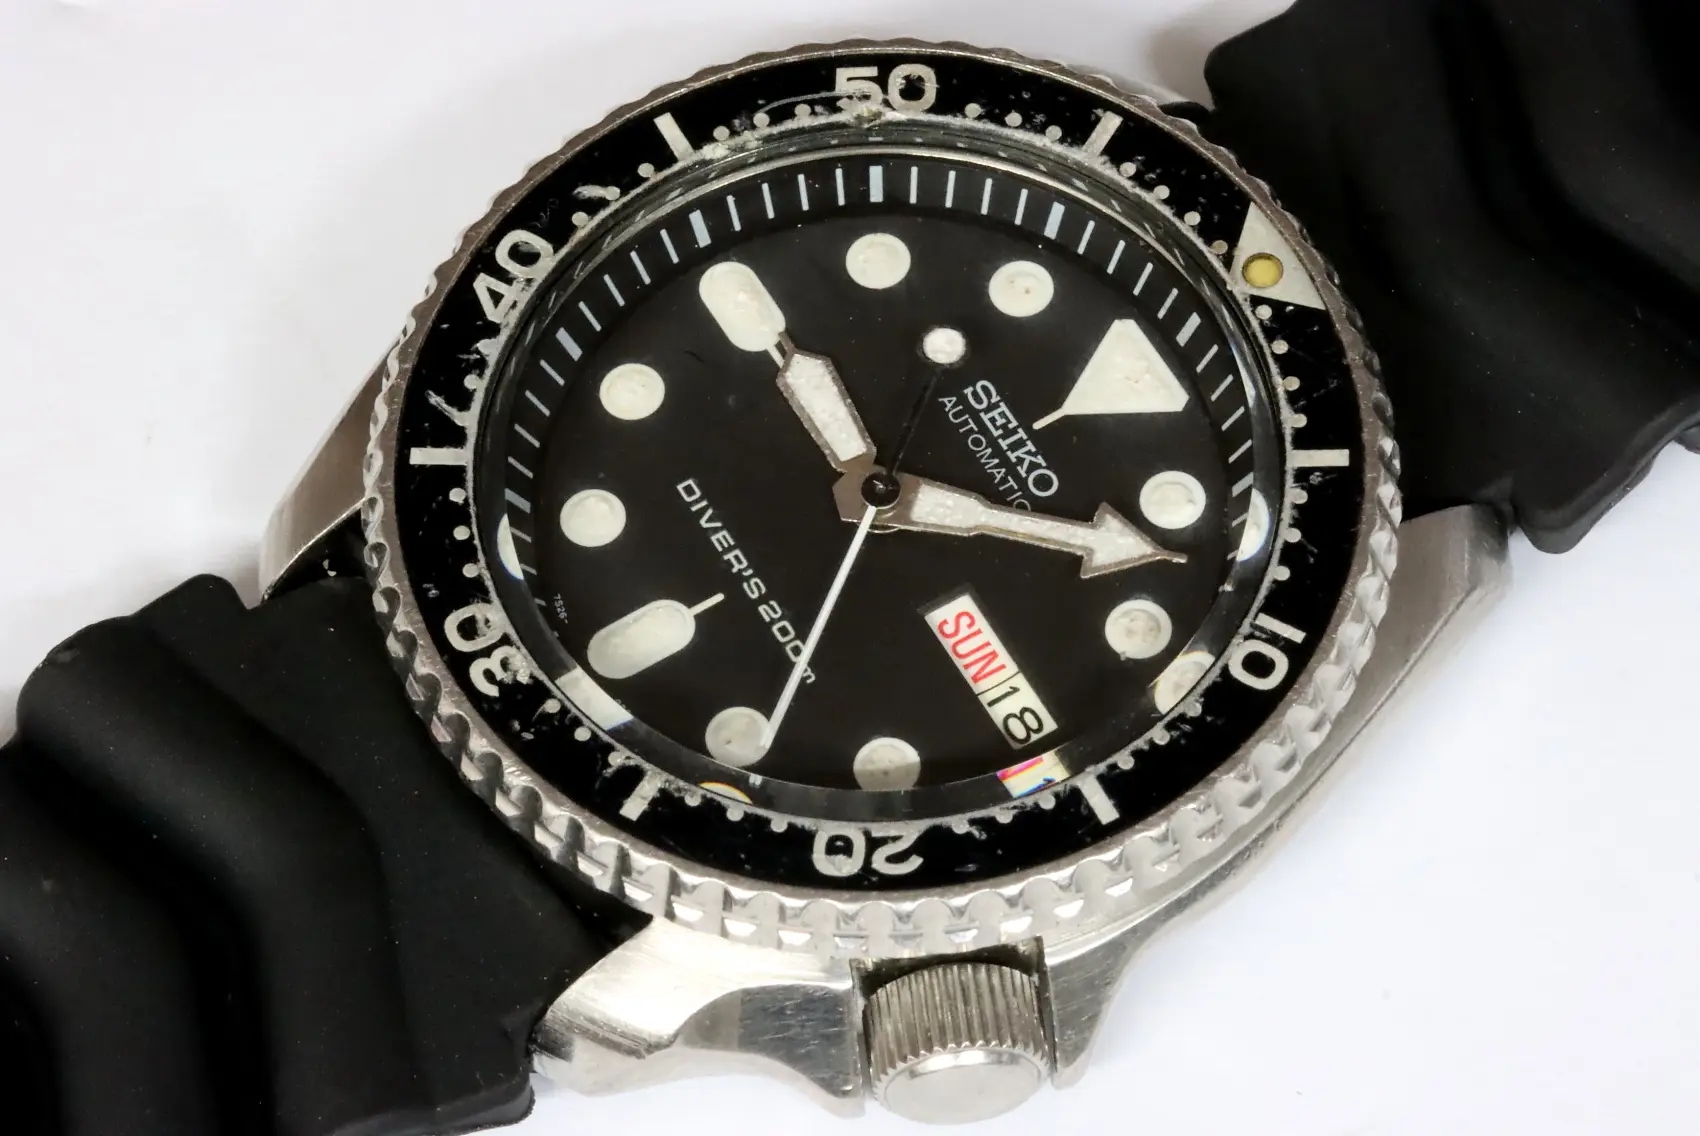 Seiko 7S26-0020 SKX007 diver's with non luminous dial